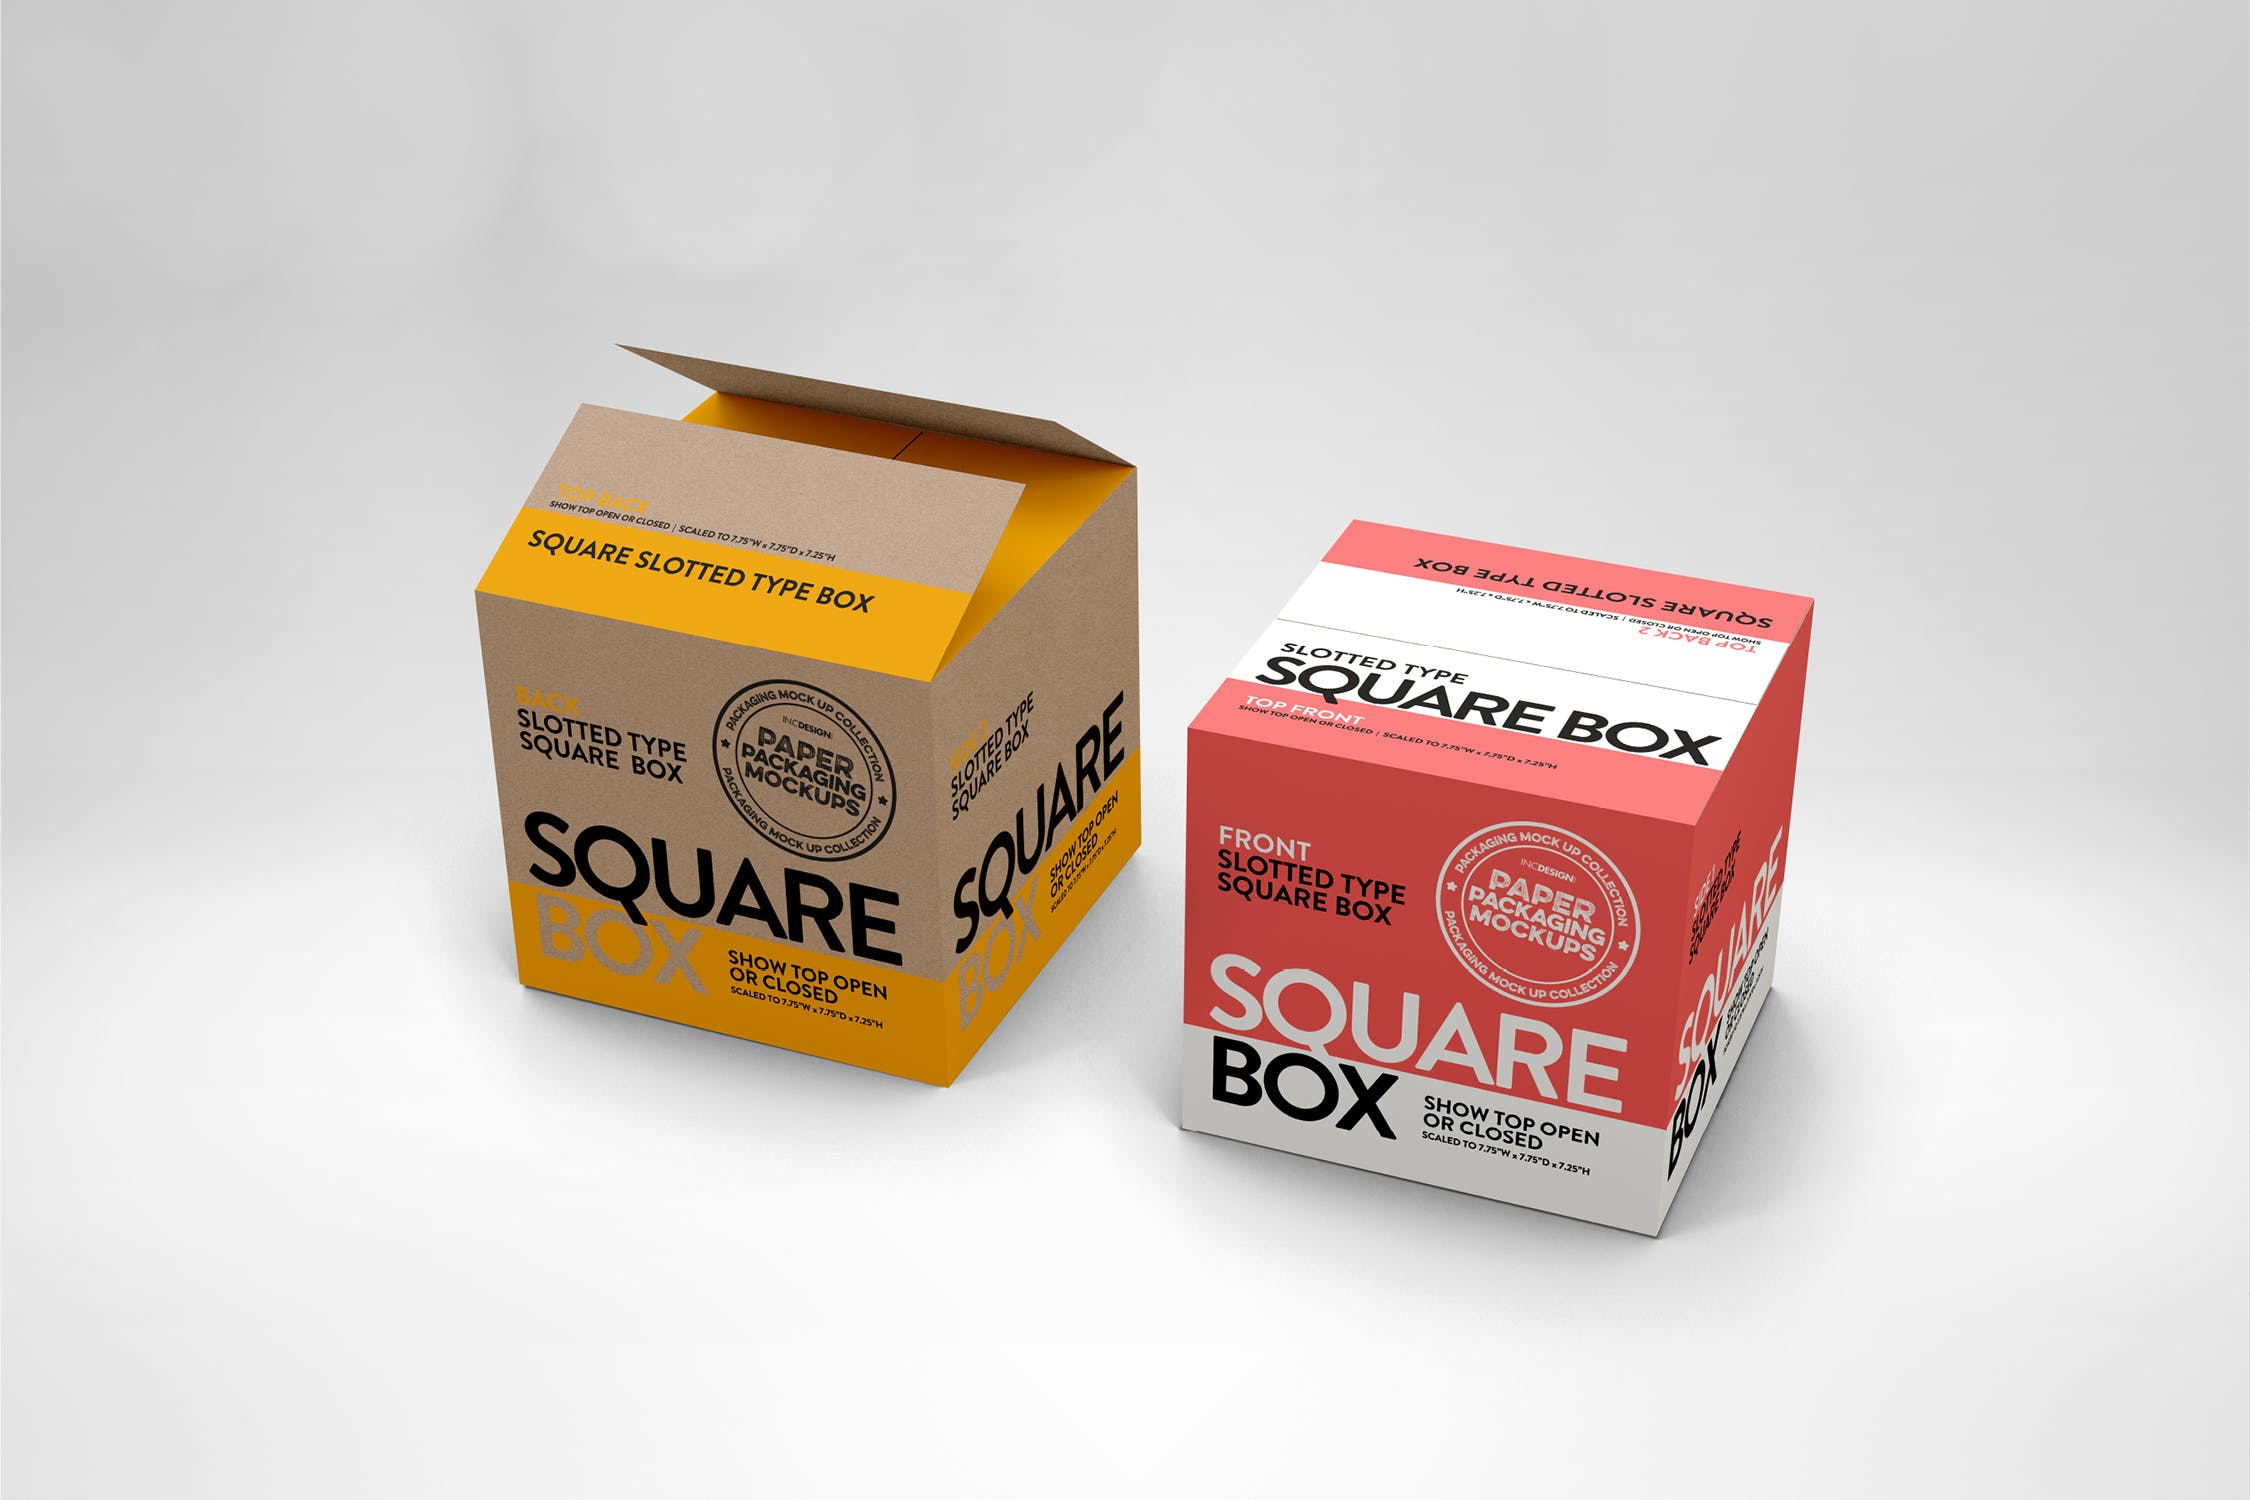 方形开槽纸盒包装设计效果图样机 Square Slotted-Type Paper Box Packaging Mockup插图(2)